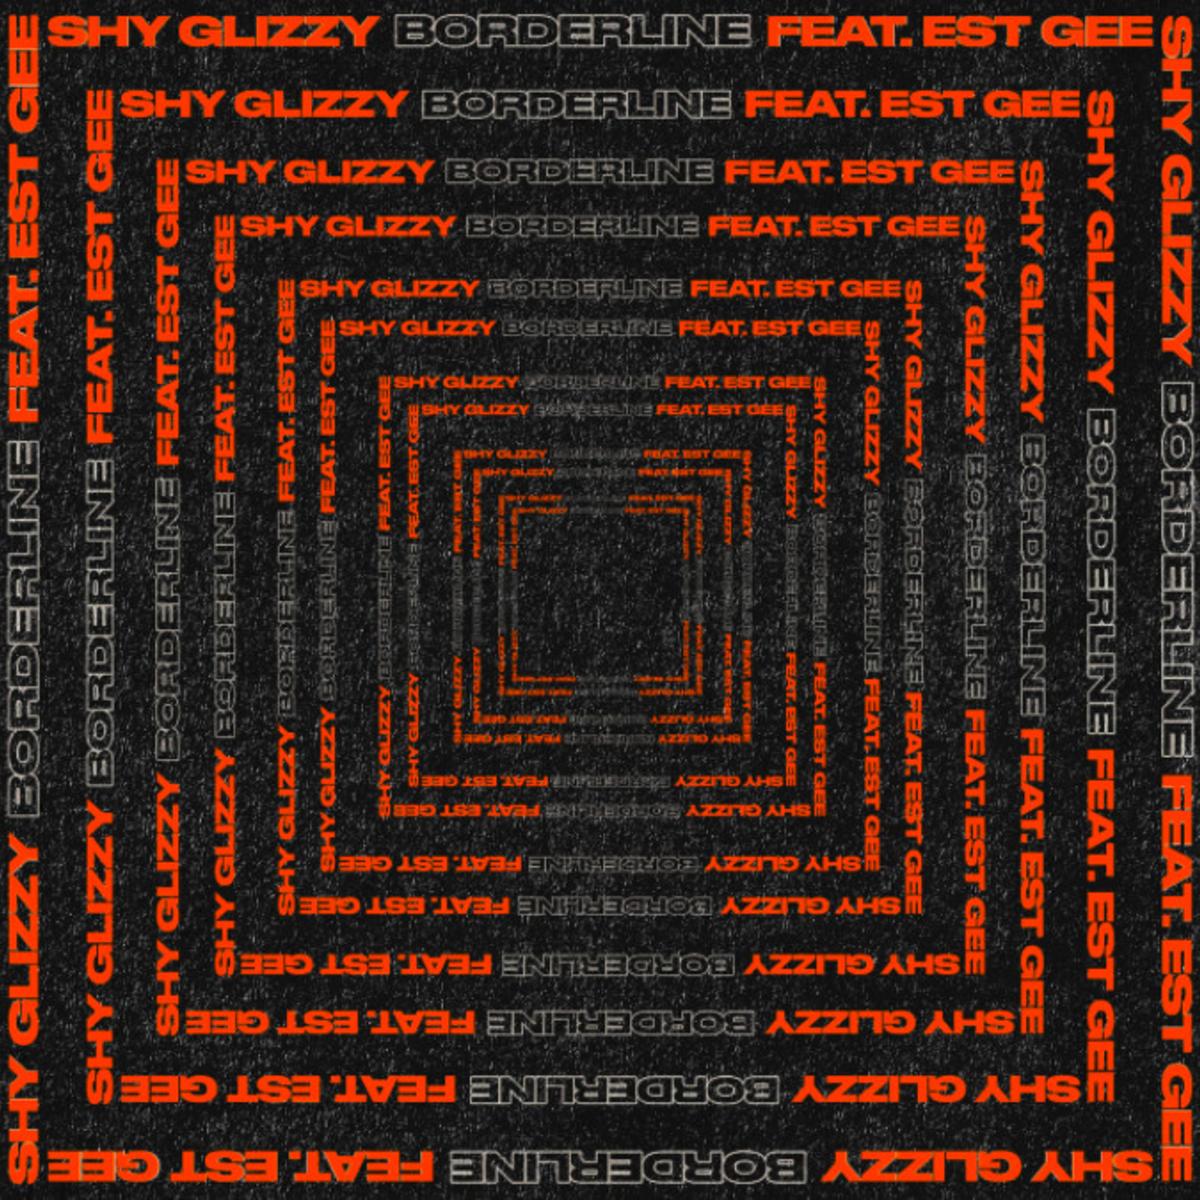 DOWNLOAD MP3: Shy Glizzy - Borderline Ft. EST Gee